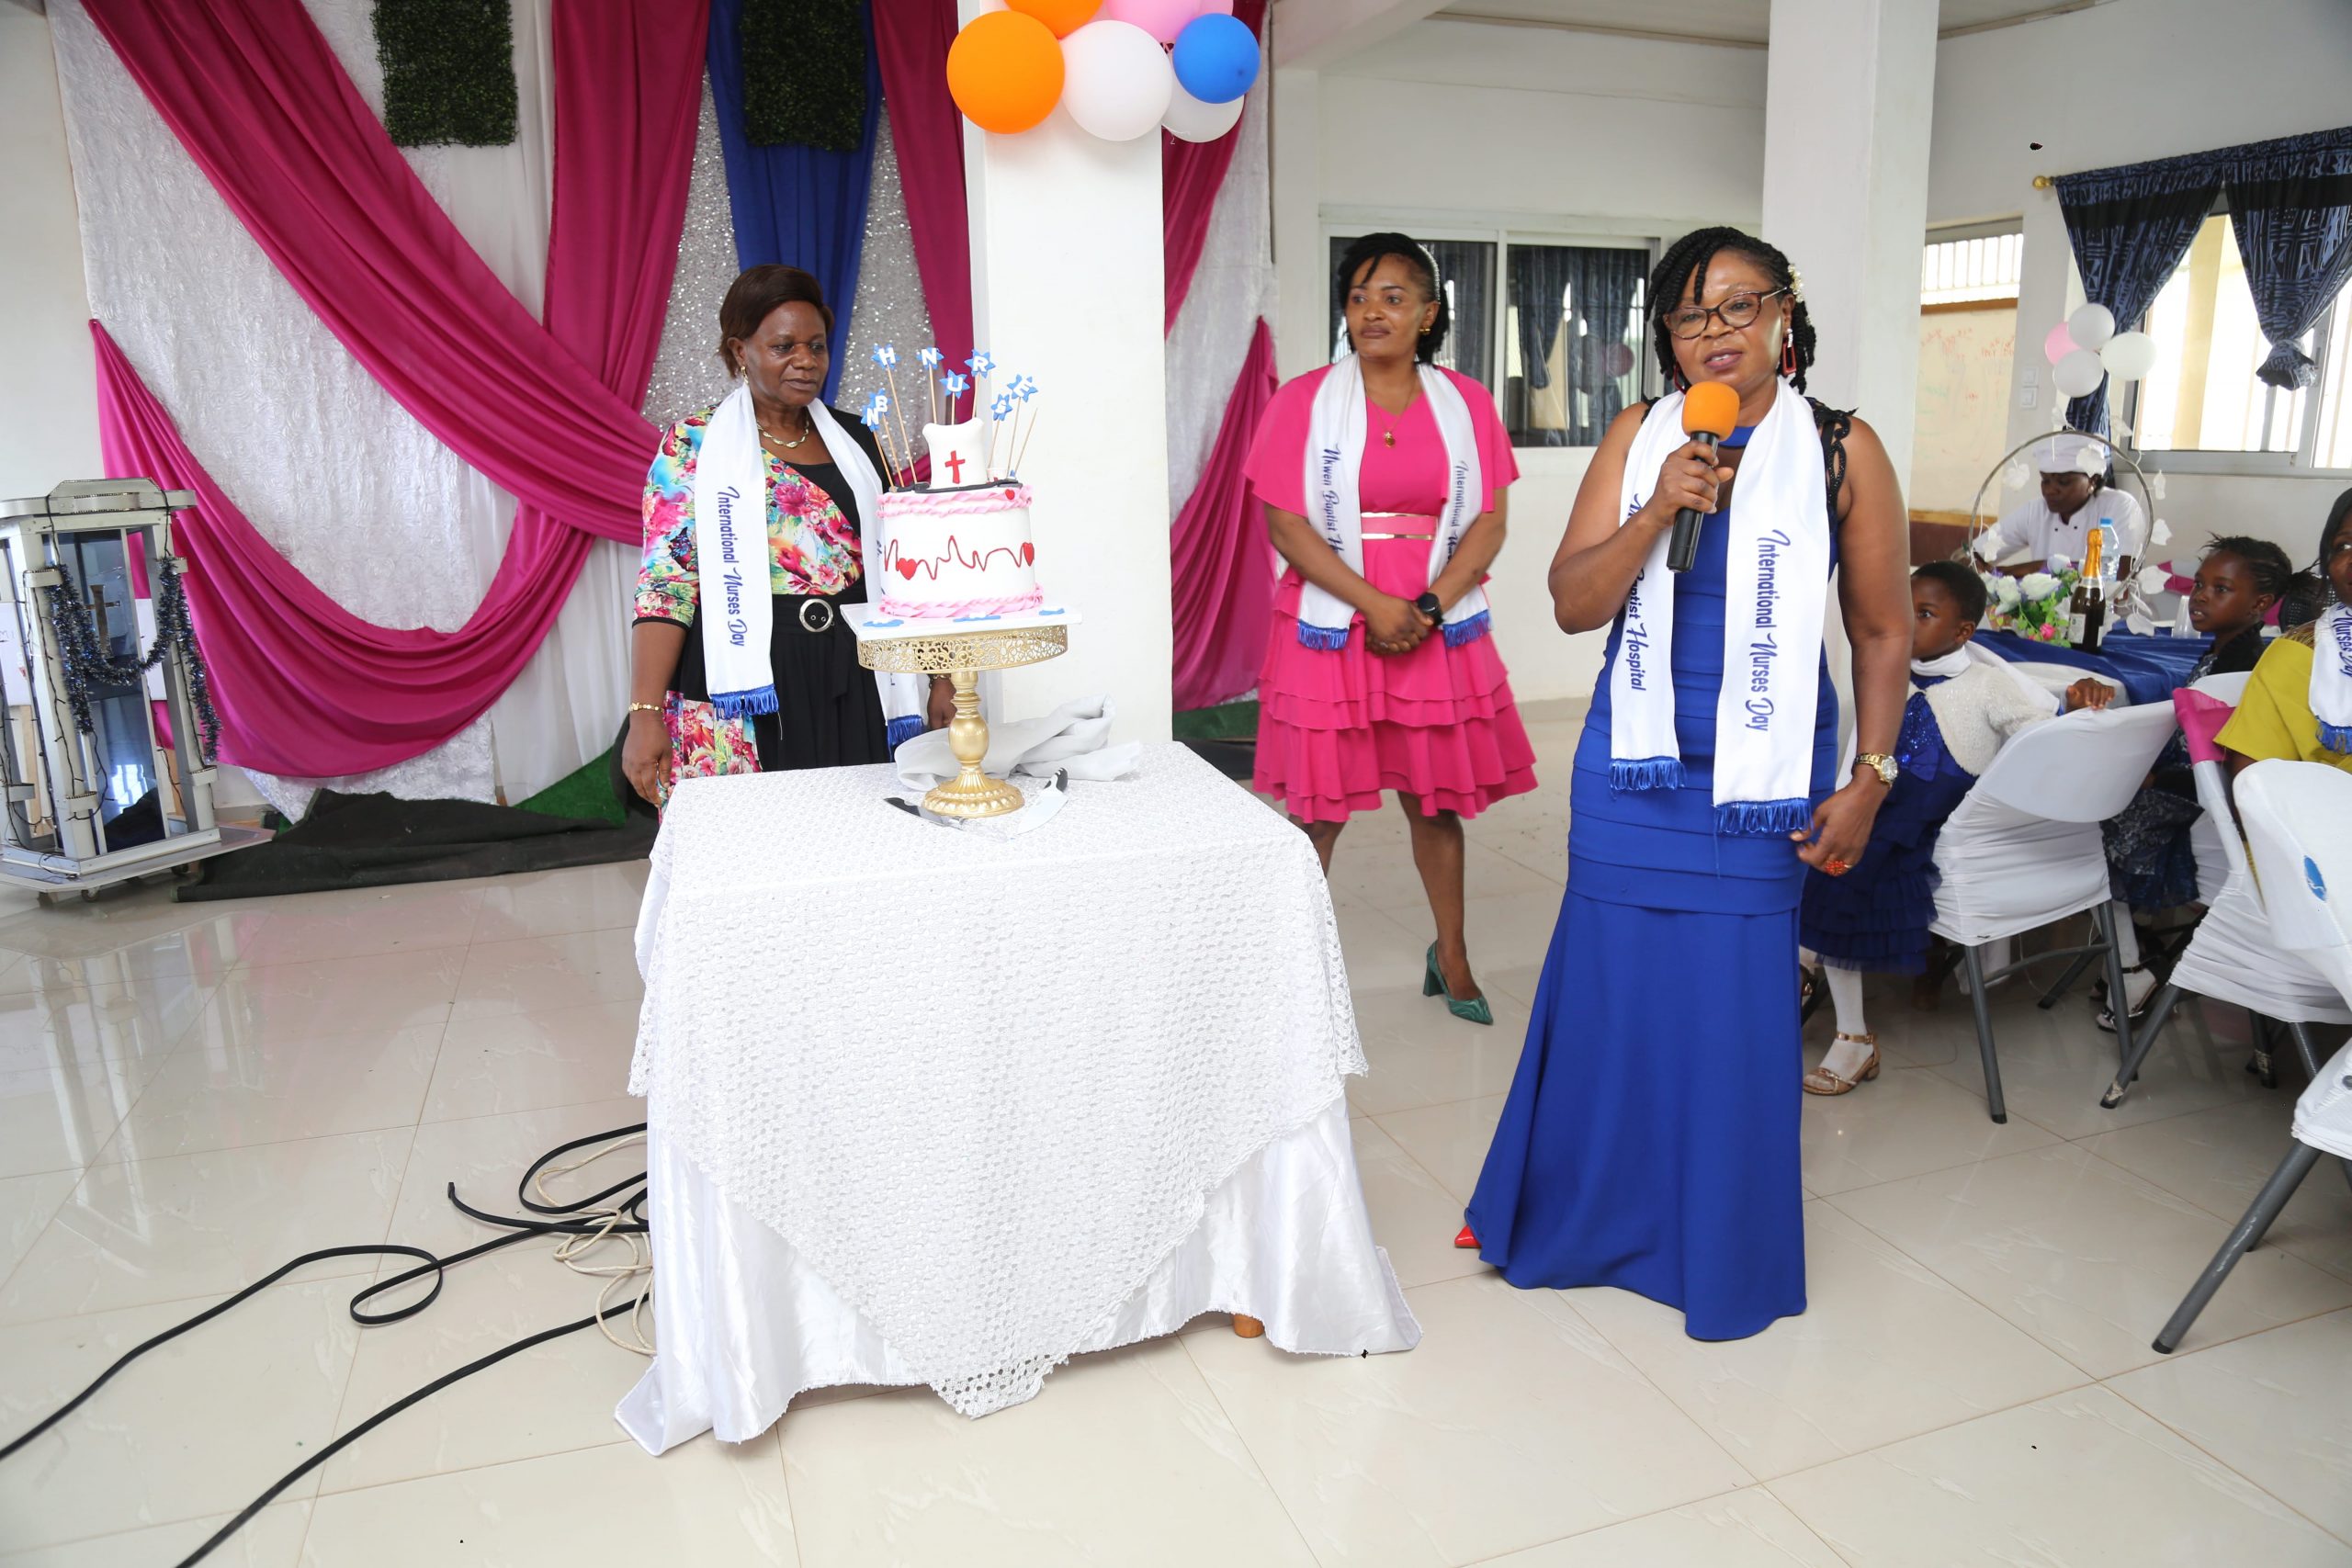 Mrs. Nana officiating the Cake Ceremony